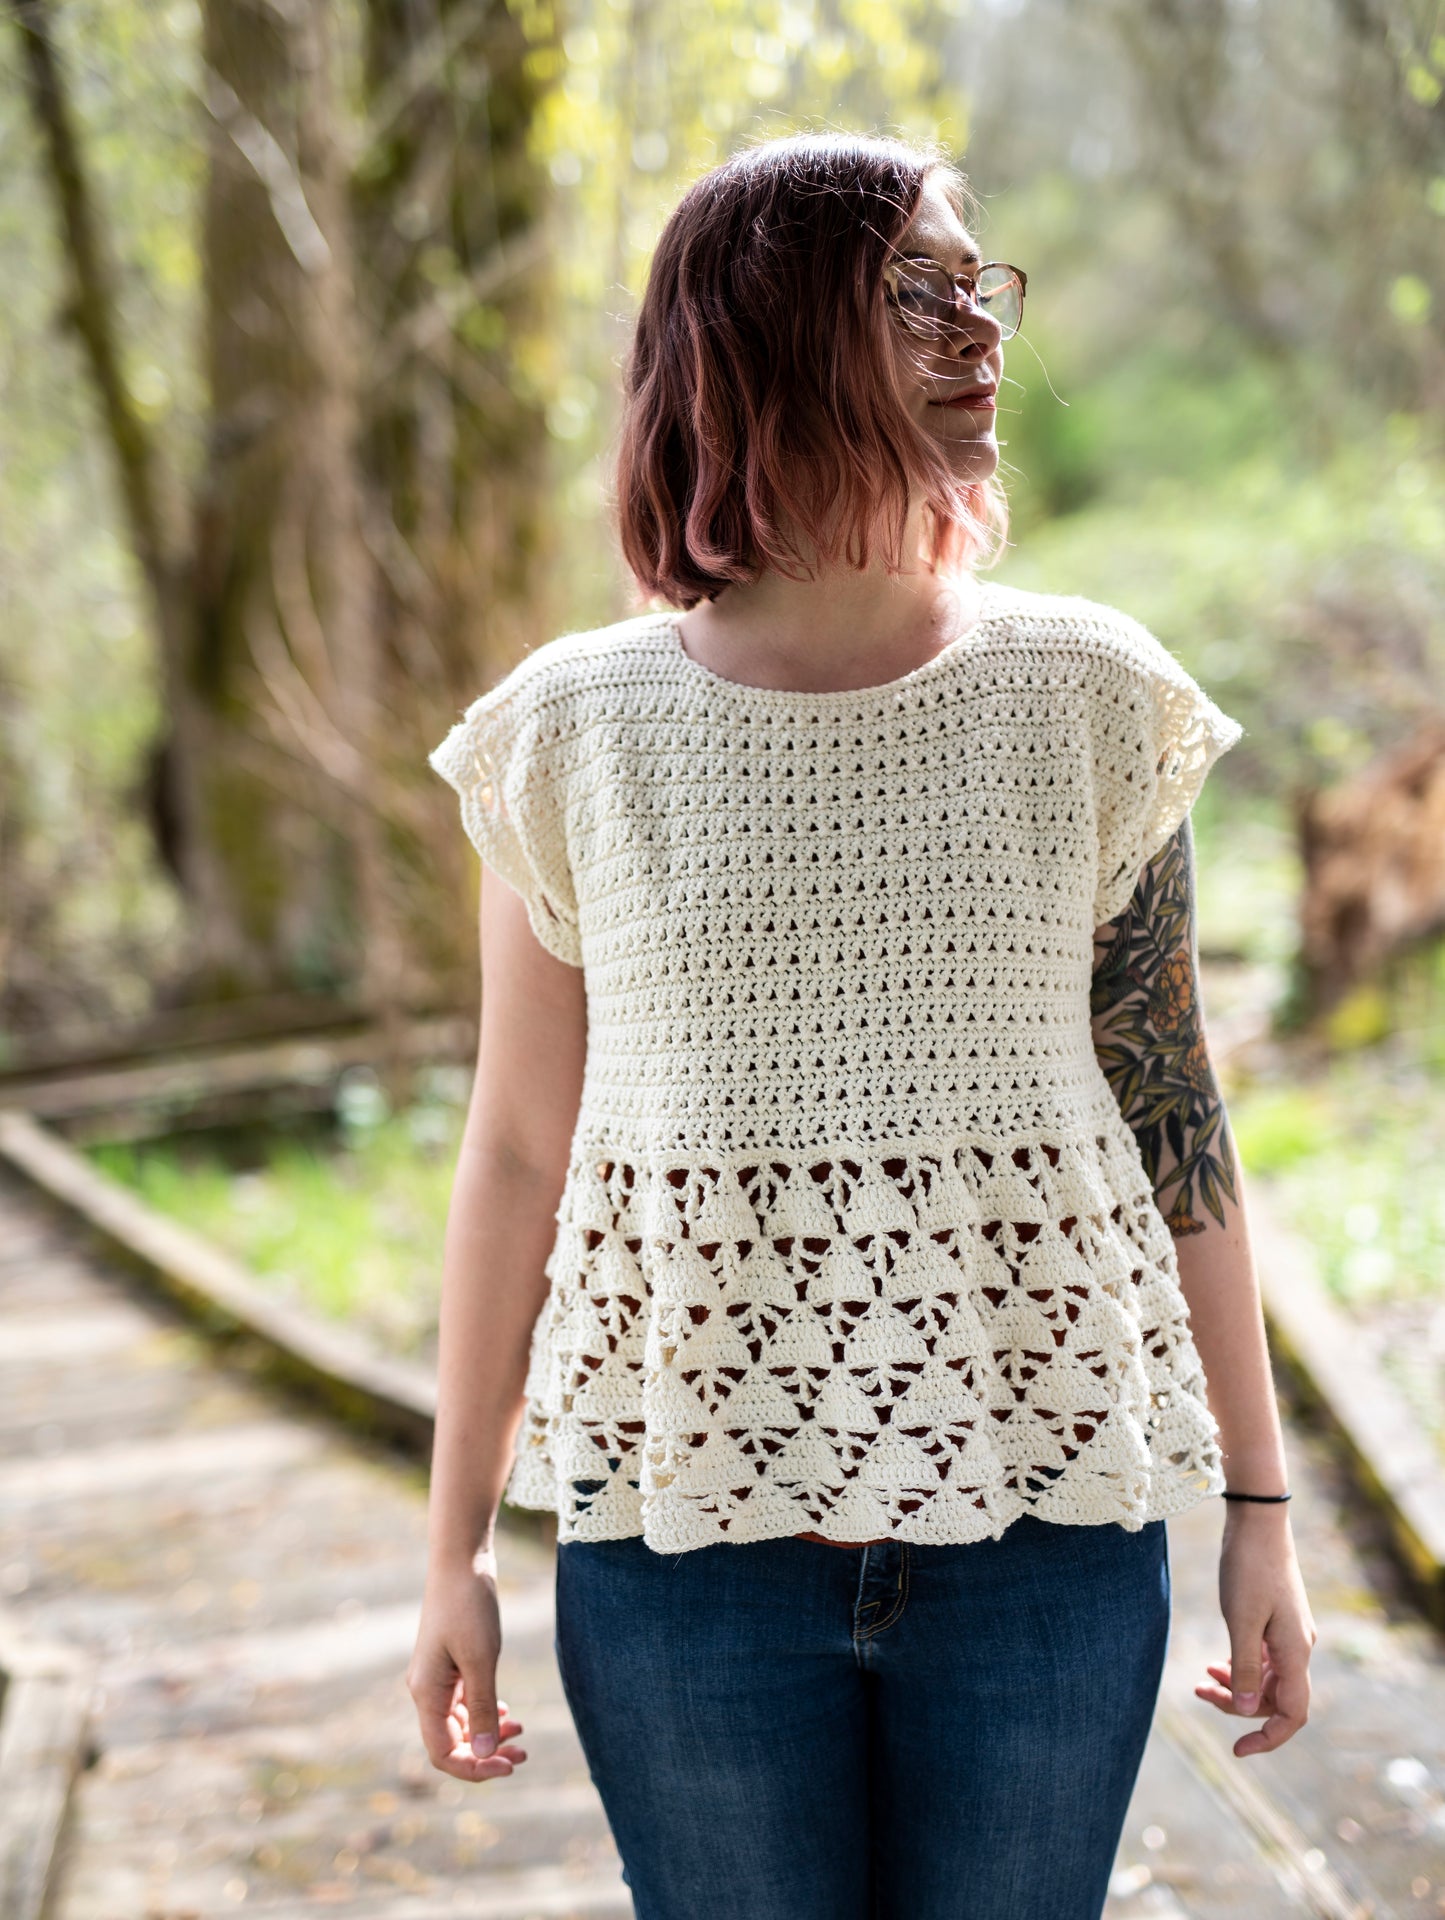 Crochet Pattern: The Tern Tunic Dress